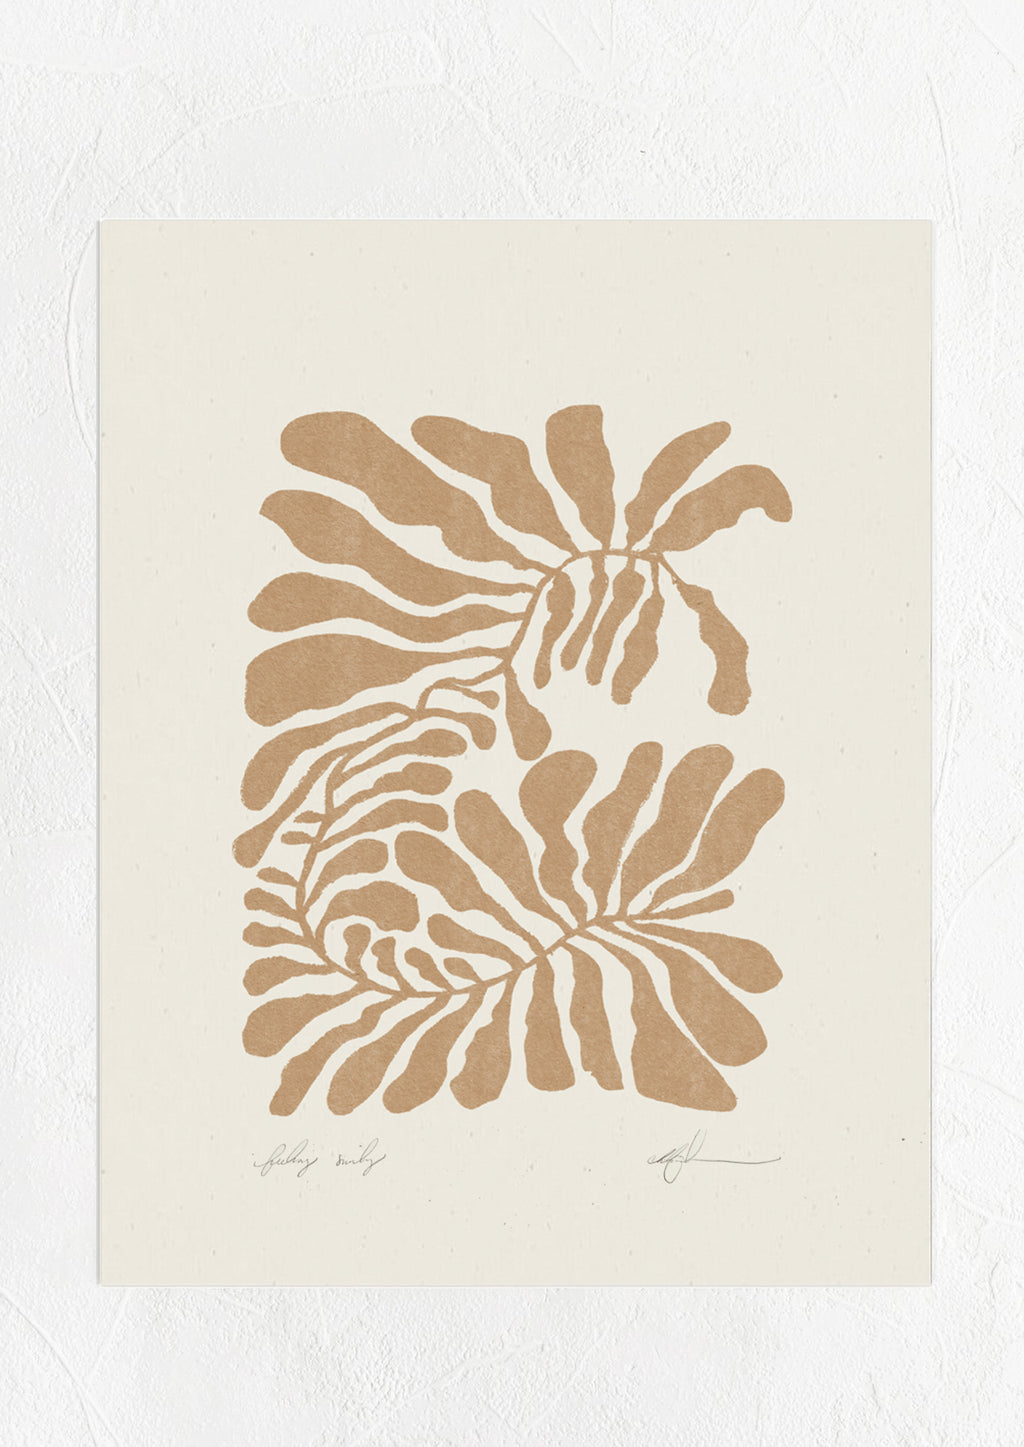 1: A digital art print of a curled leaf form in brown.